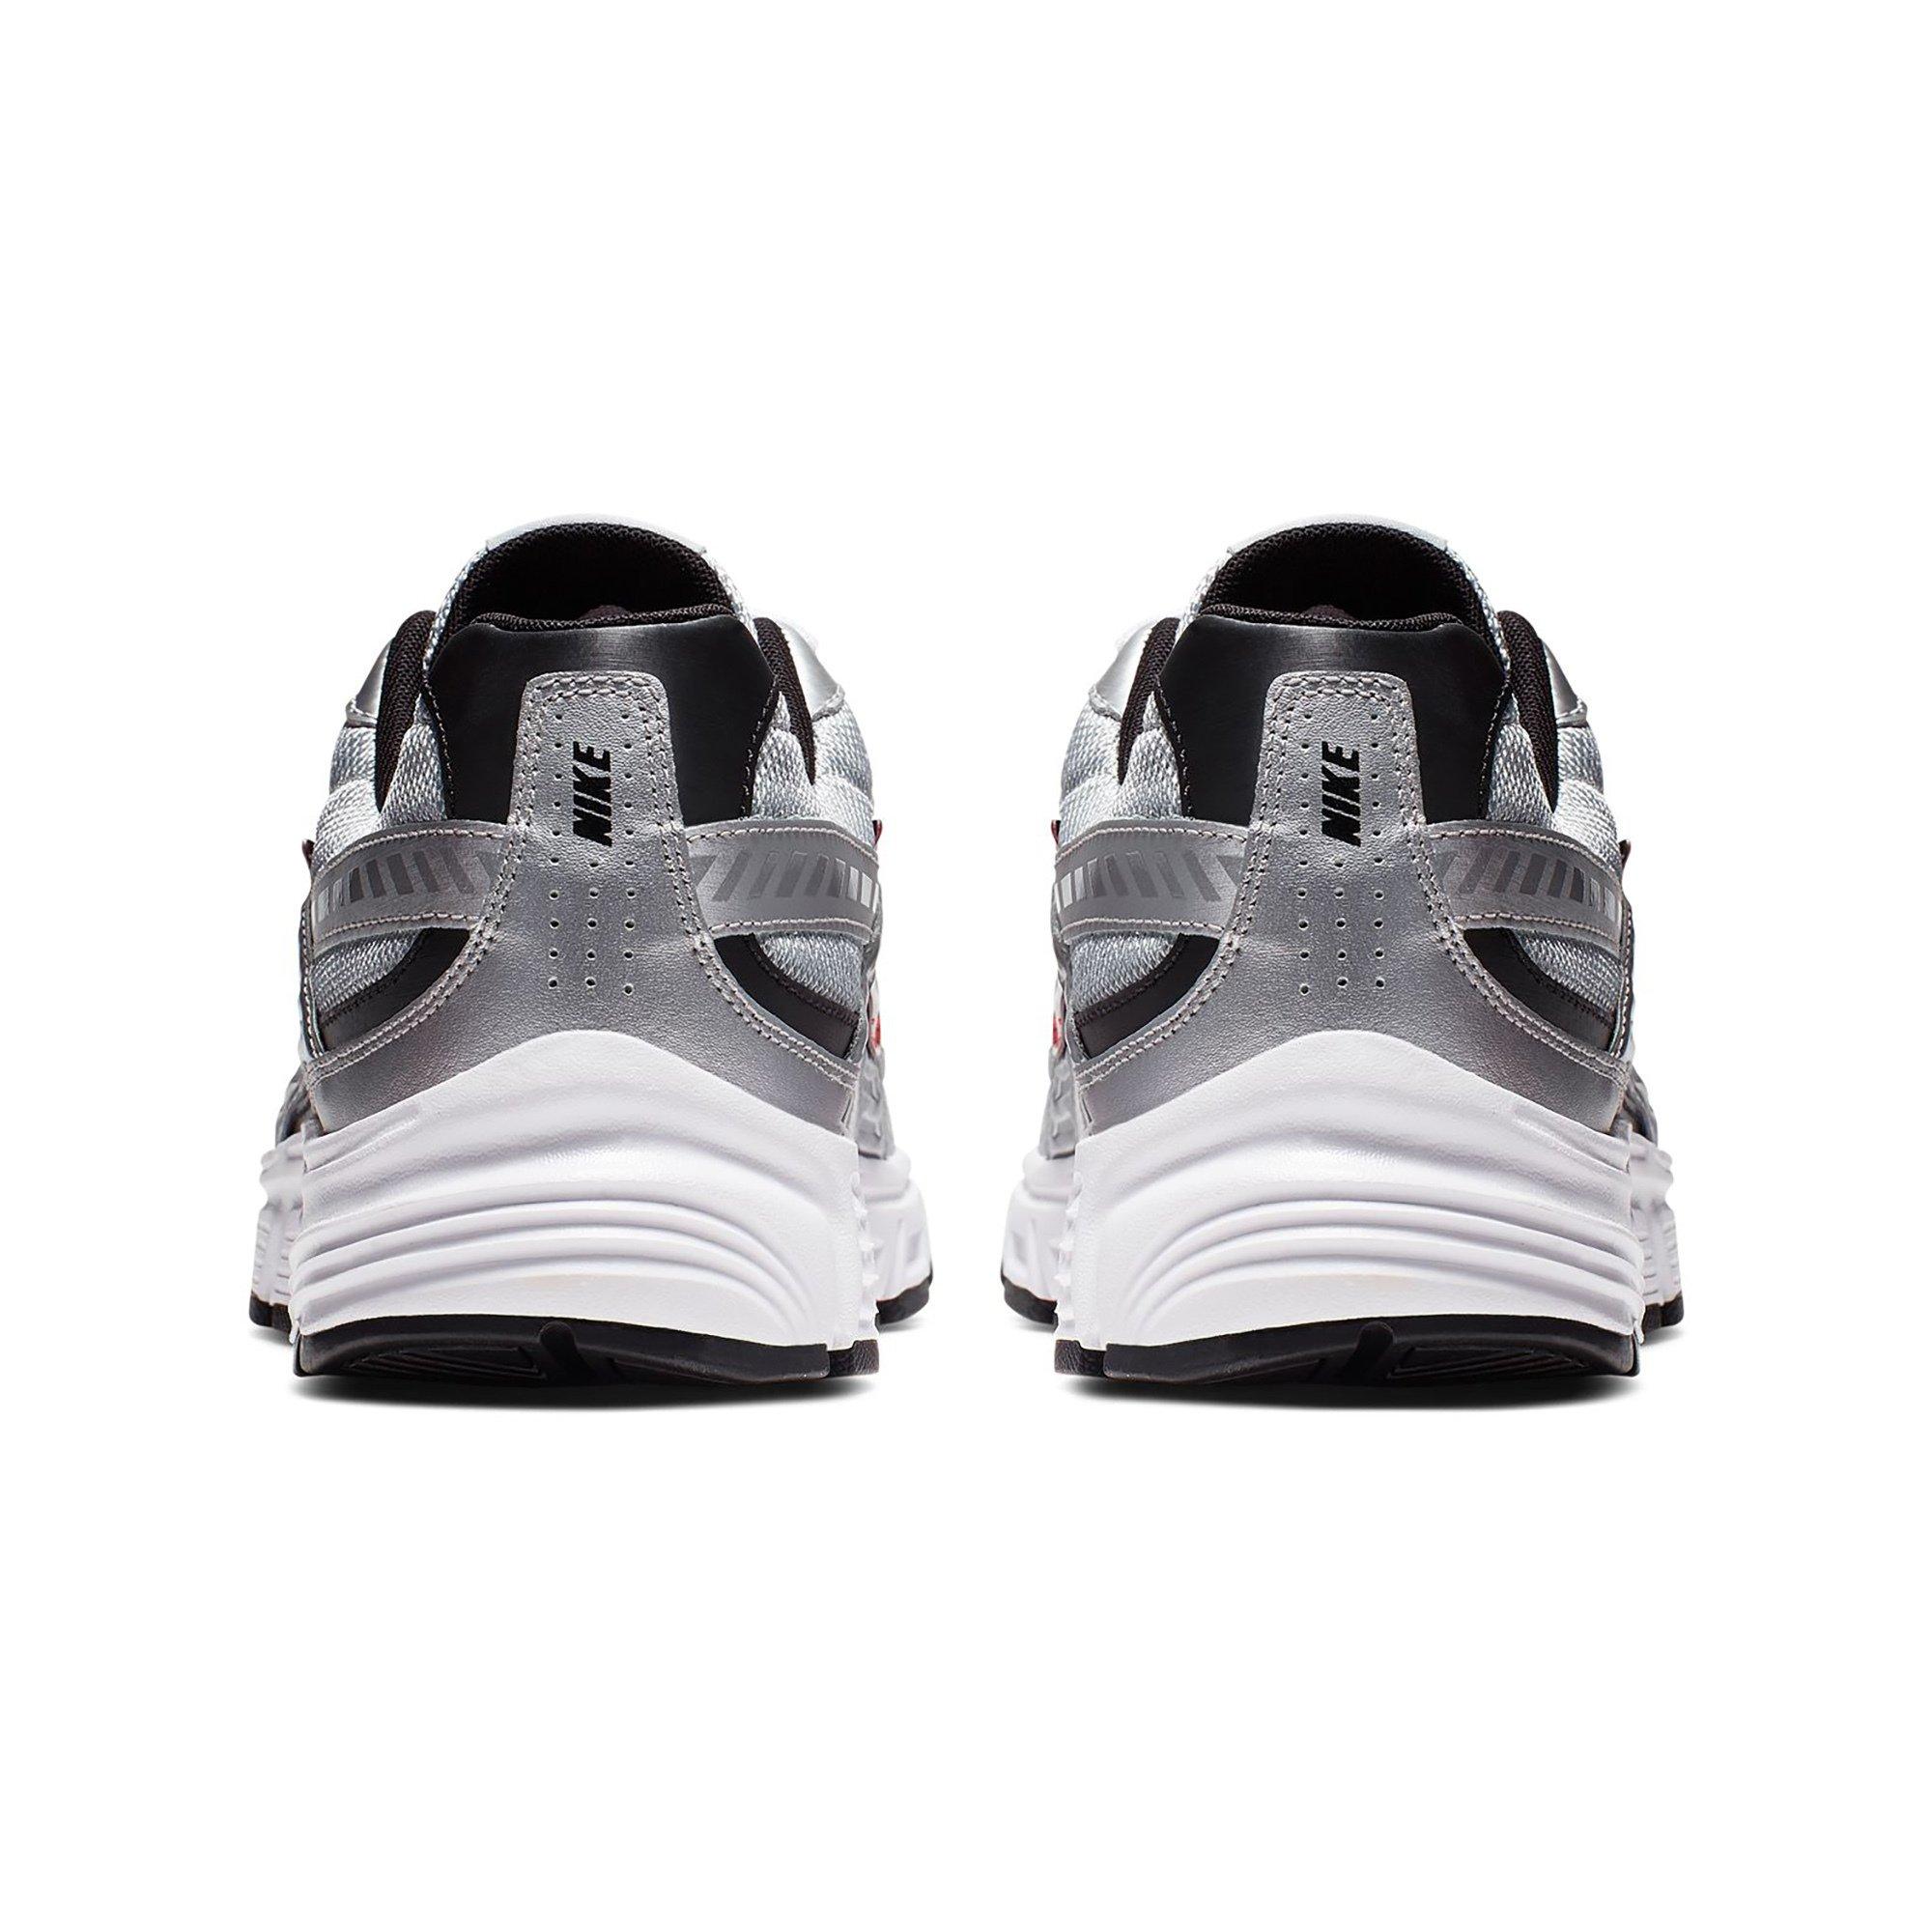 NIKE Men's Nike Initiator Running Shoe Sneakers, Low Top 